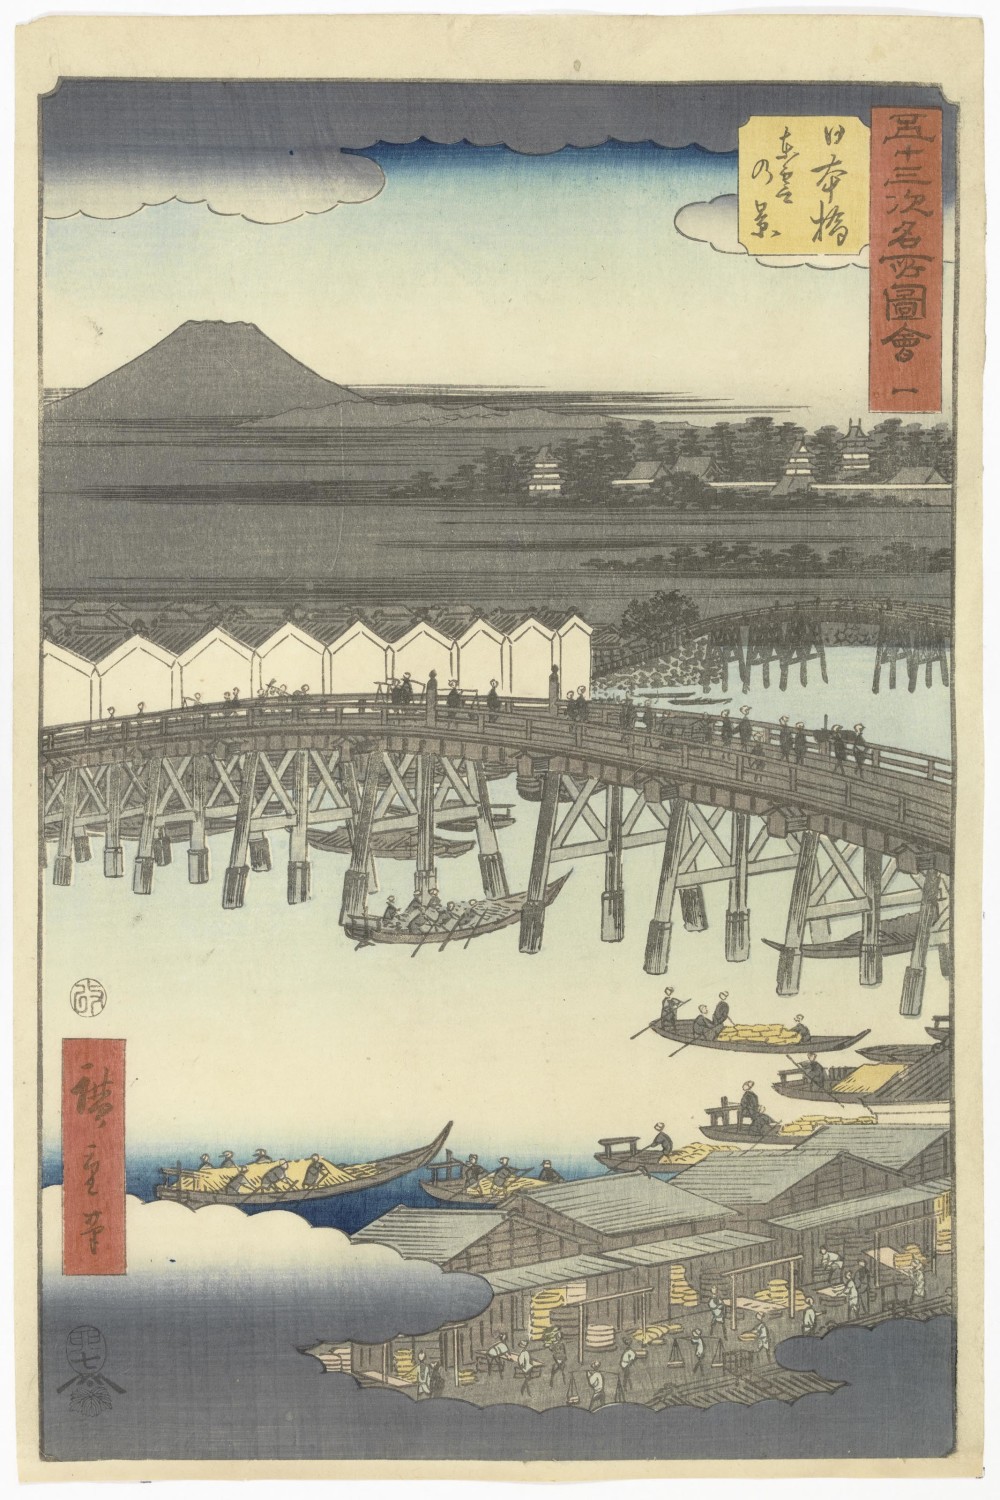 Ando Hiroshige, Nihonbashi from Upright Tokaido